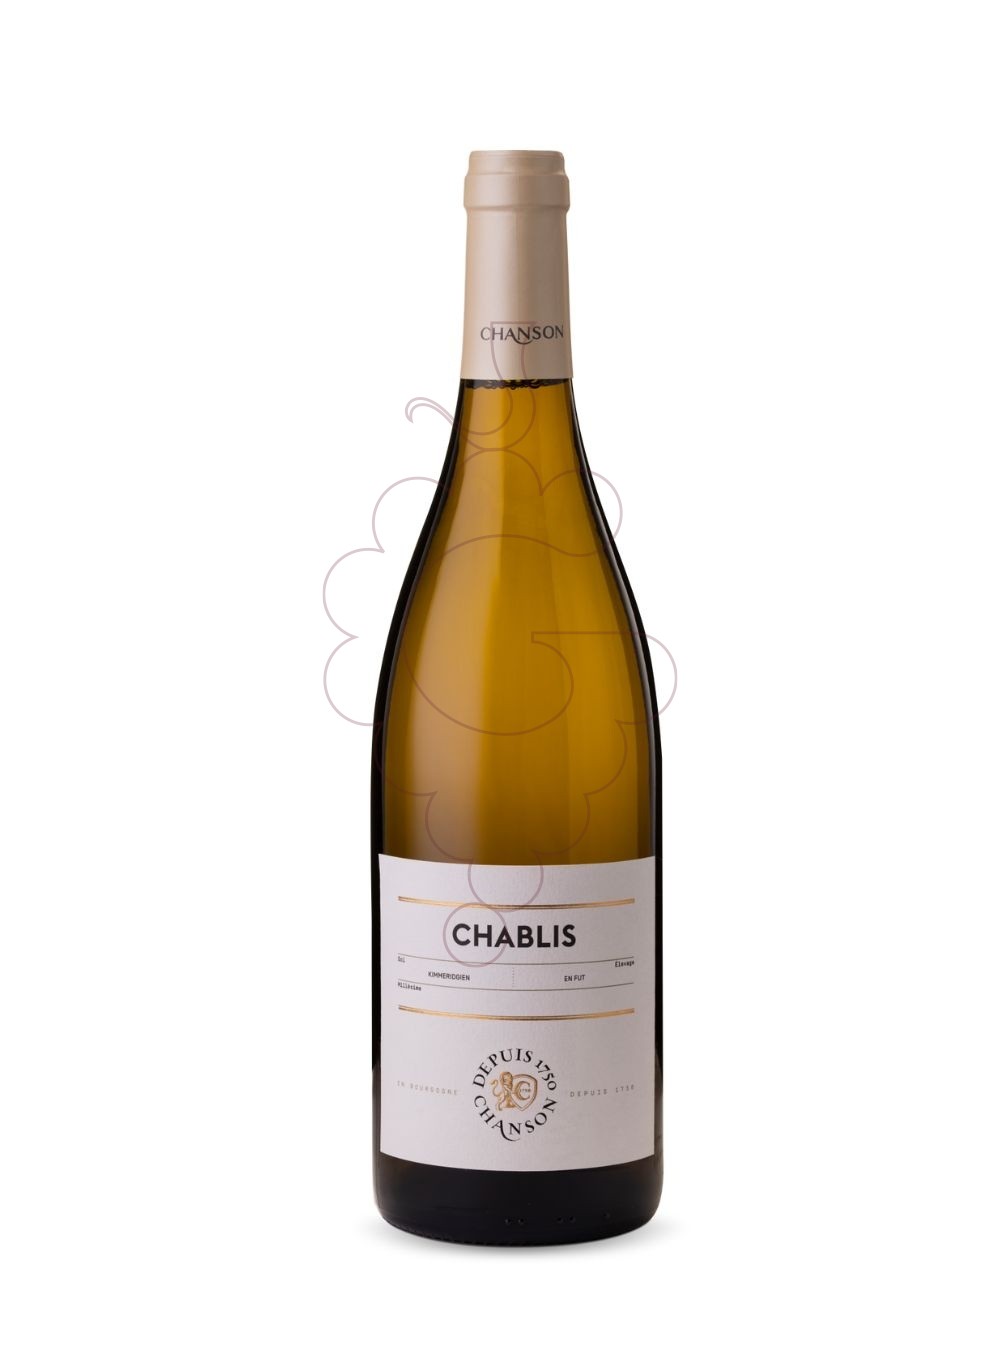 Photo Chanson Chablis Magnum white wine